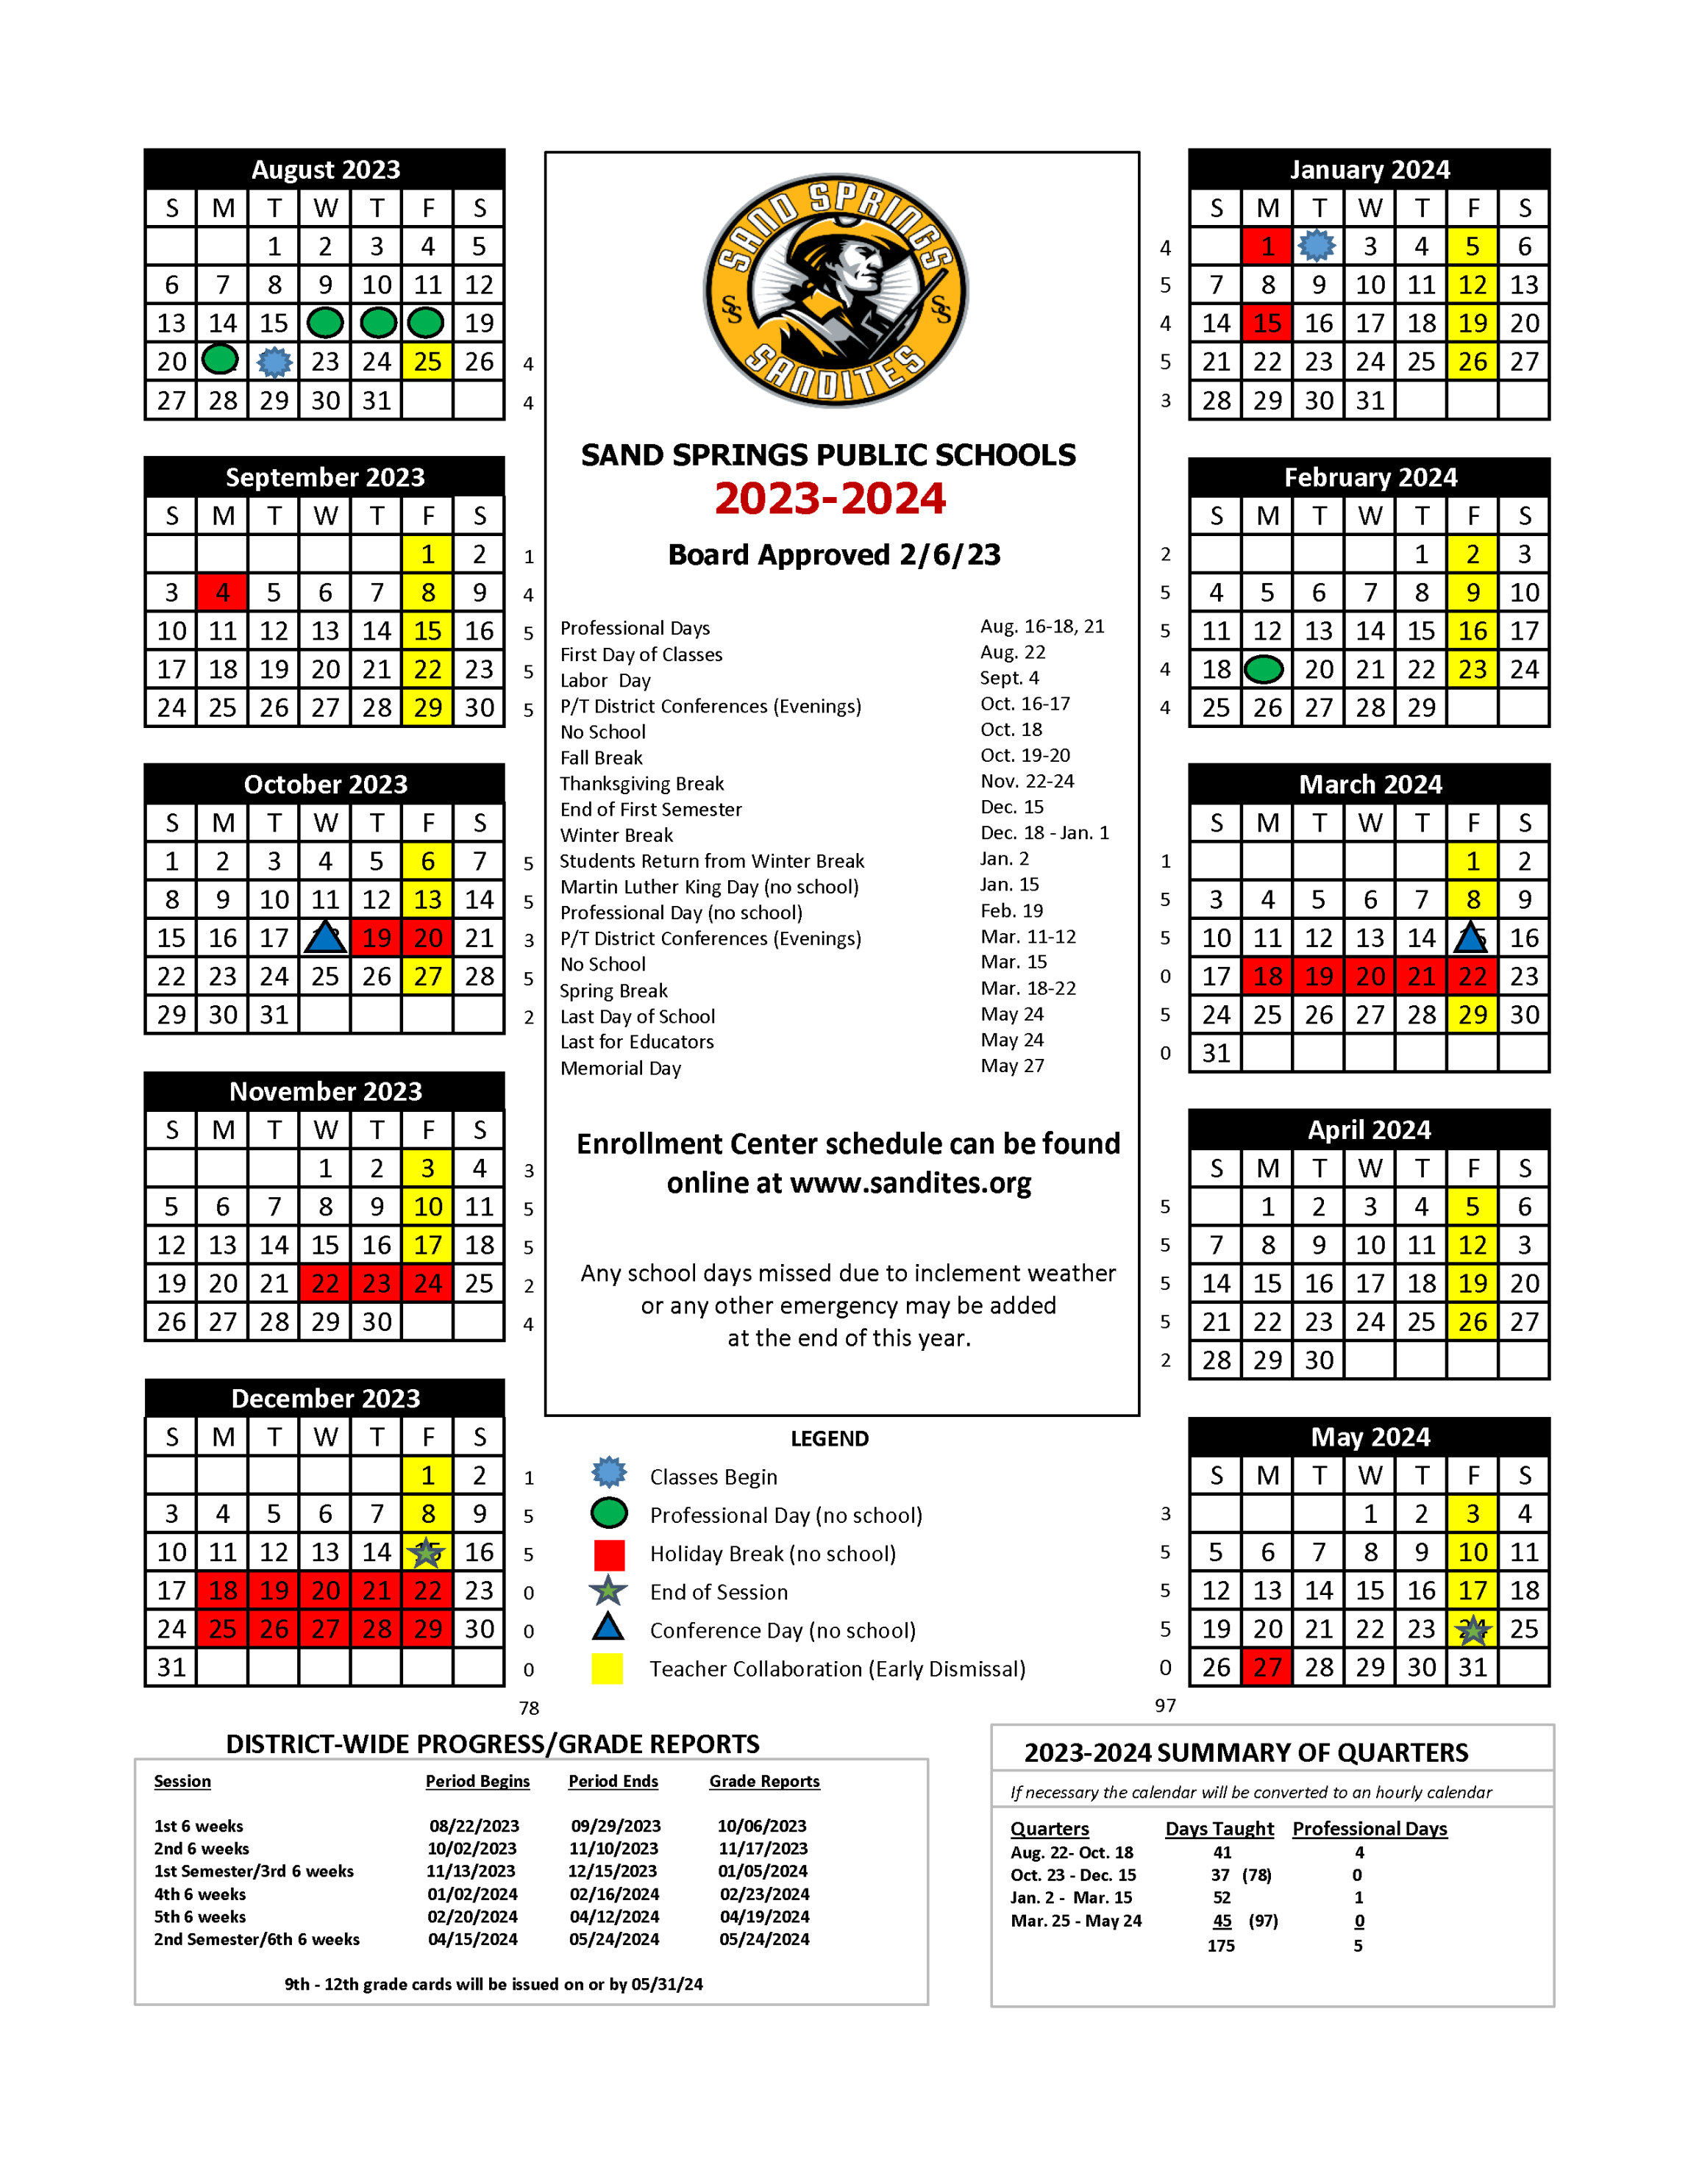 Approved School Calendars  Sand Springs Public Schools